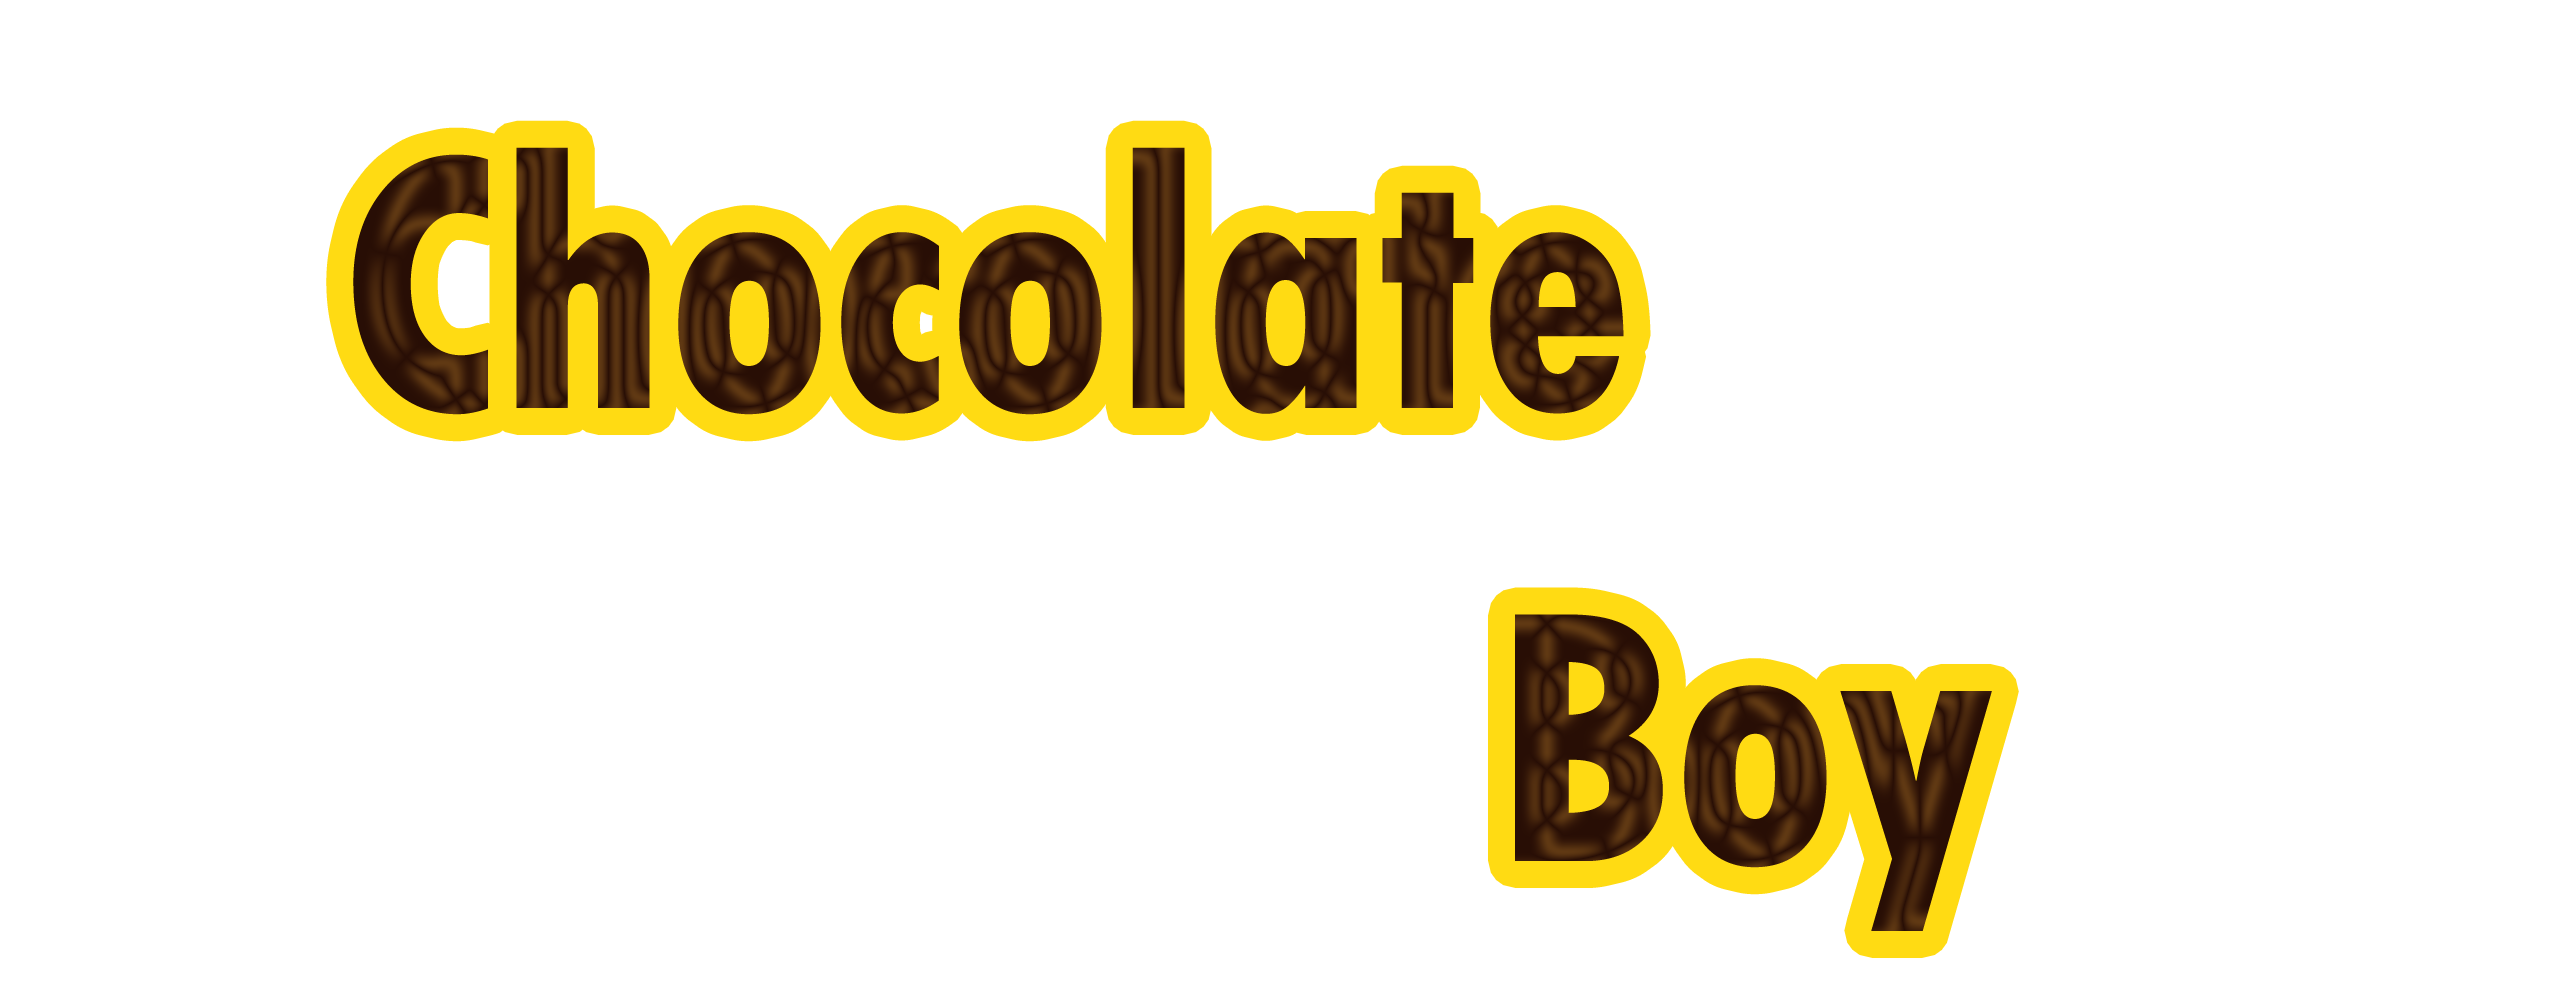 Chocolate Boy #4